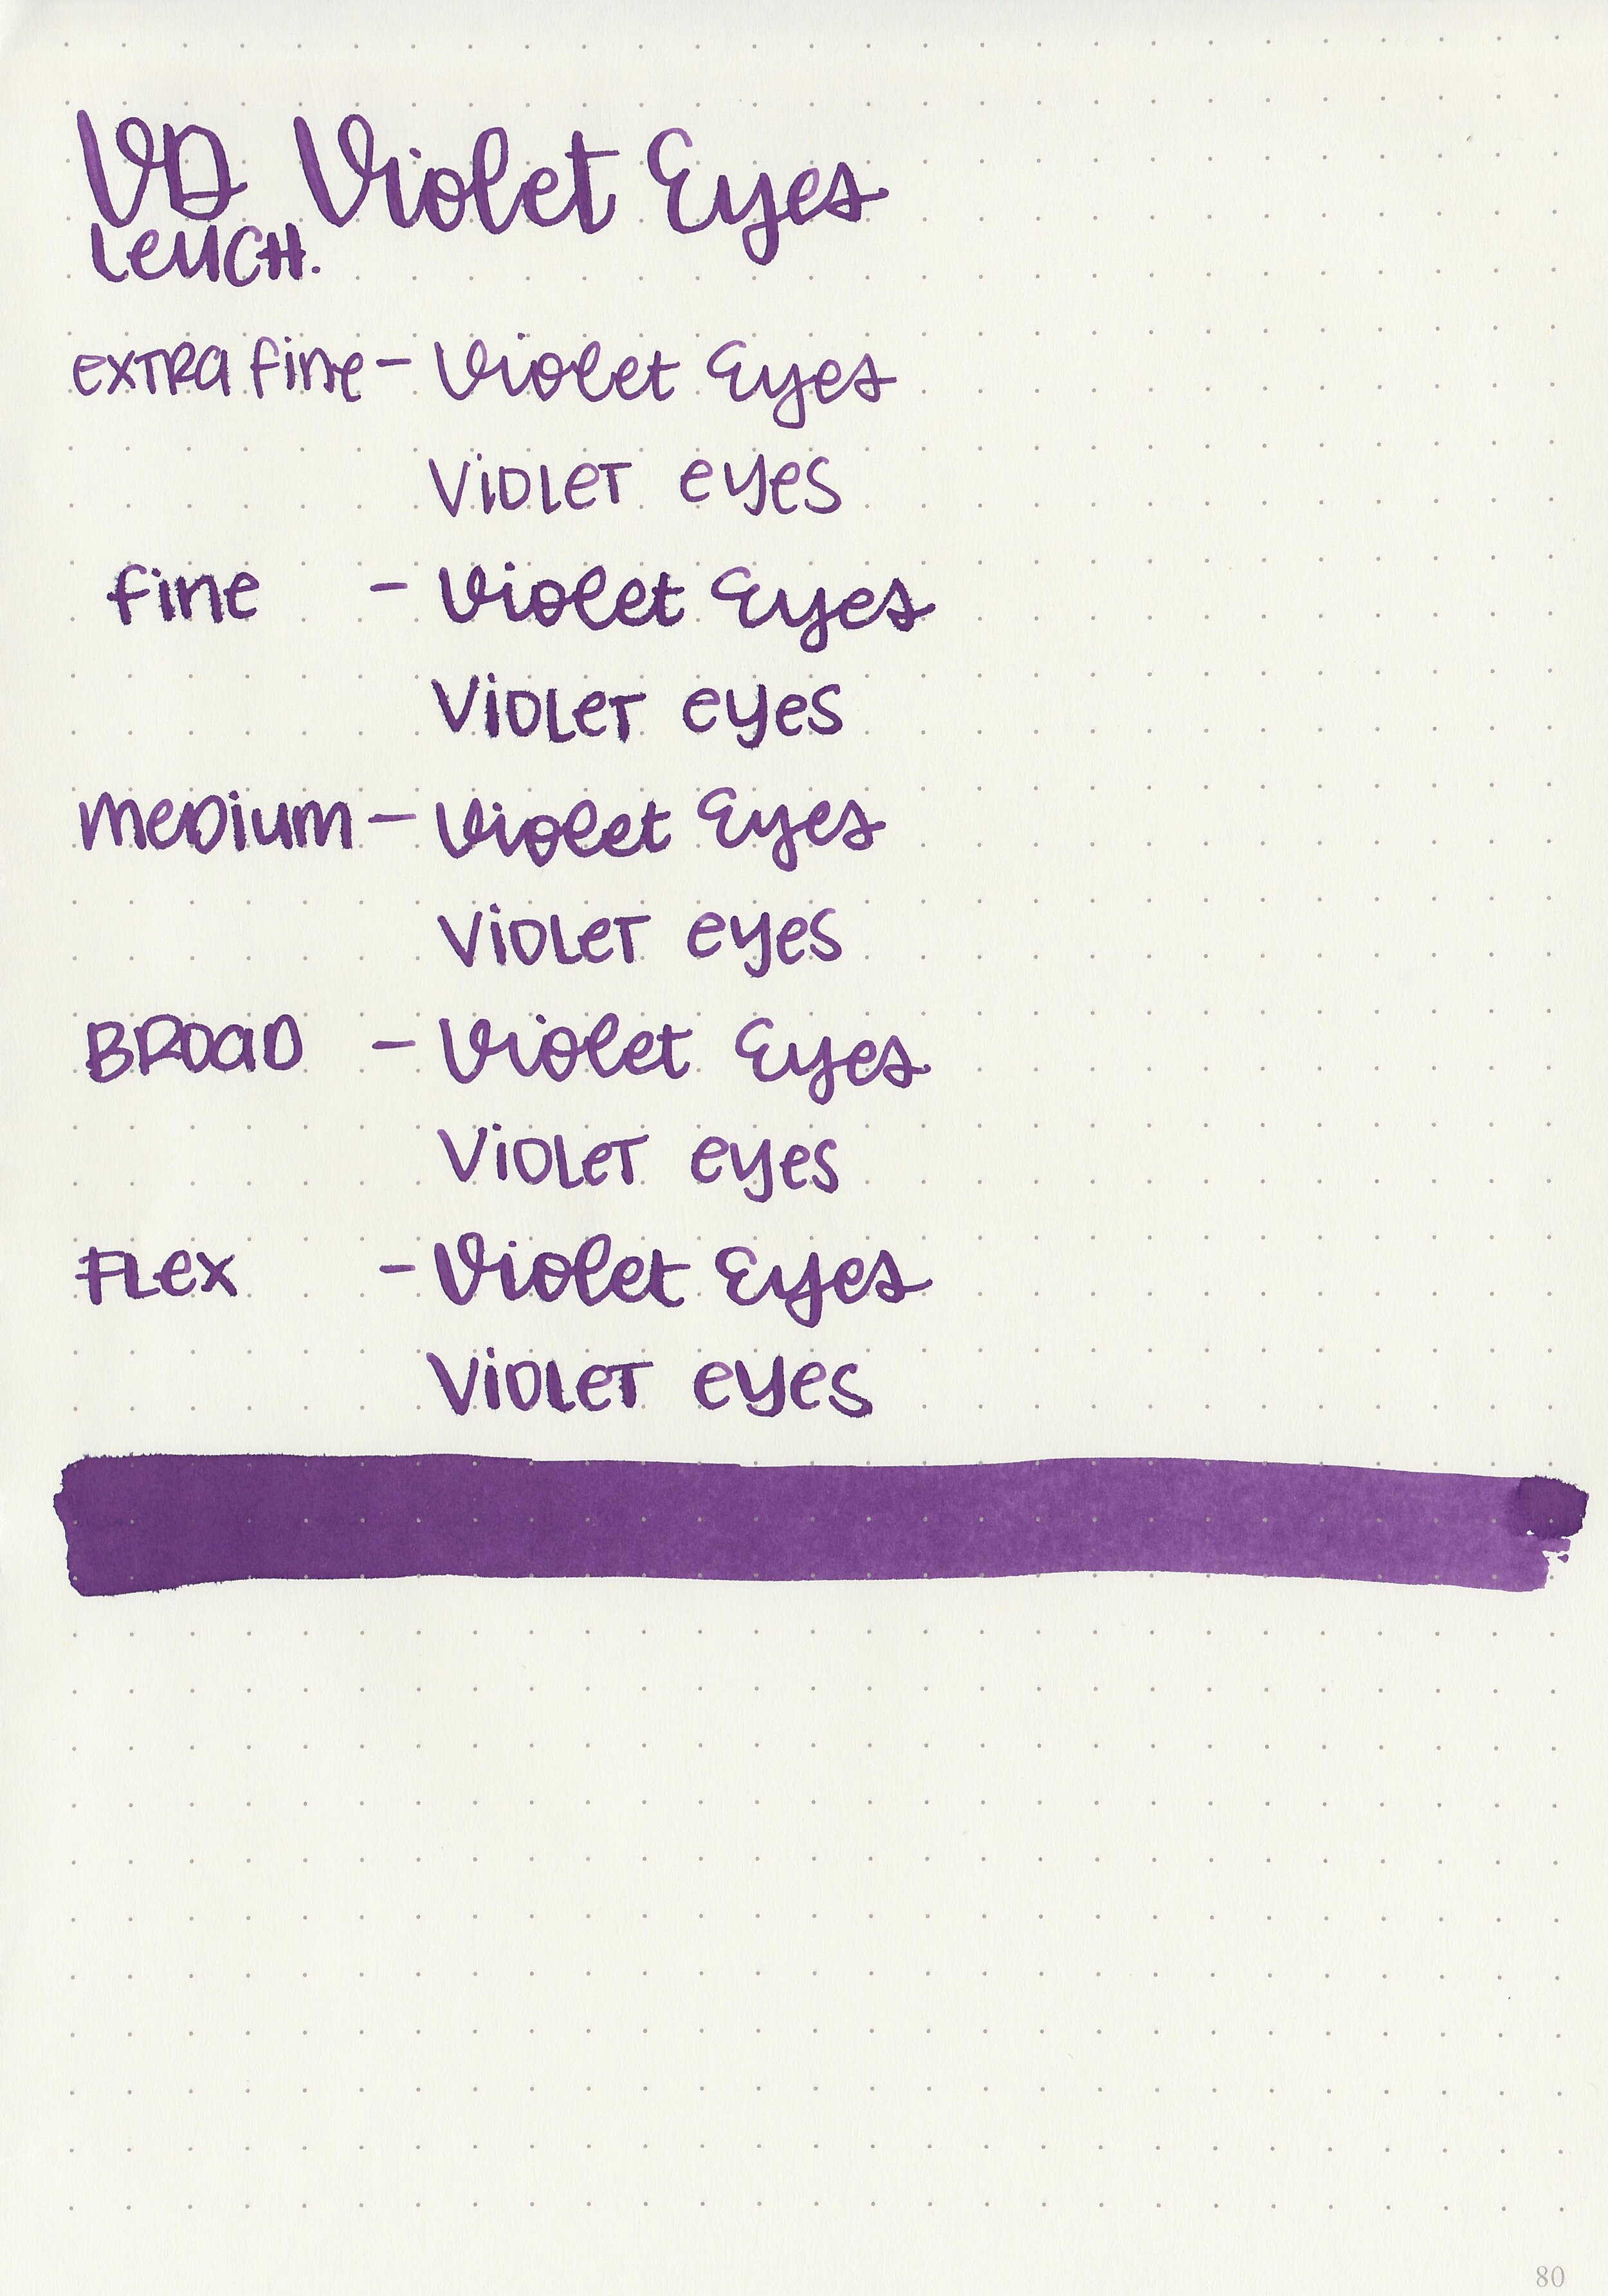 vd-violet-eyes-9.jpg